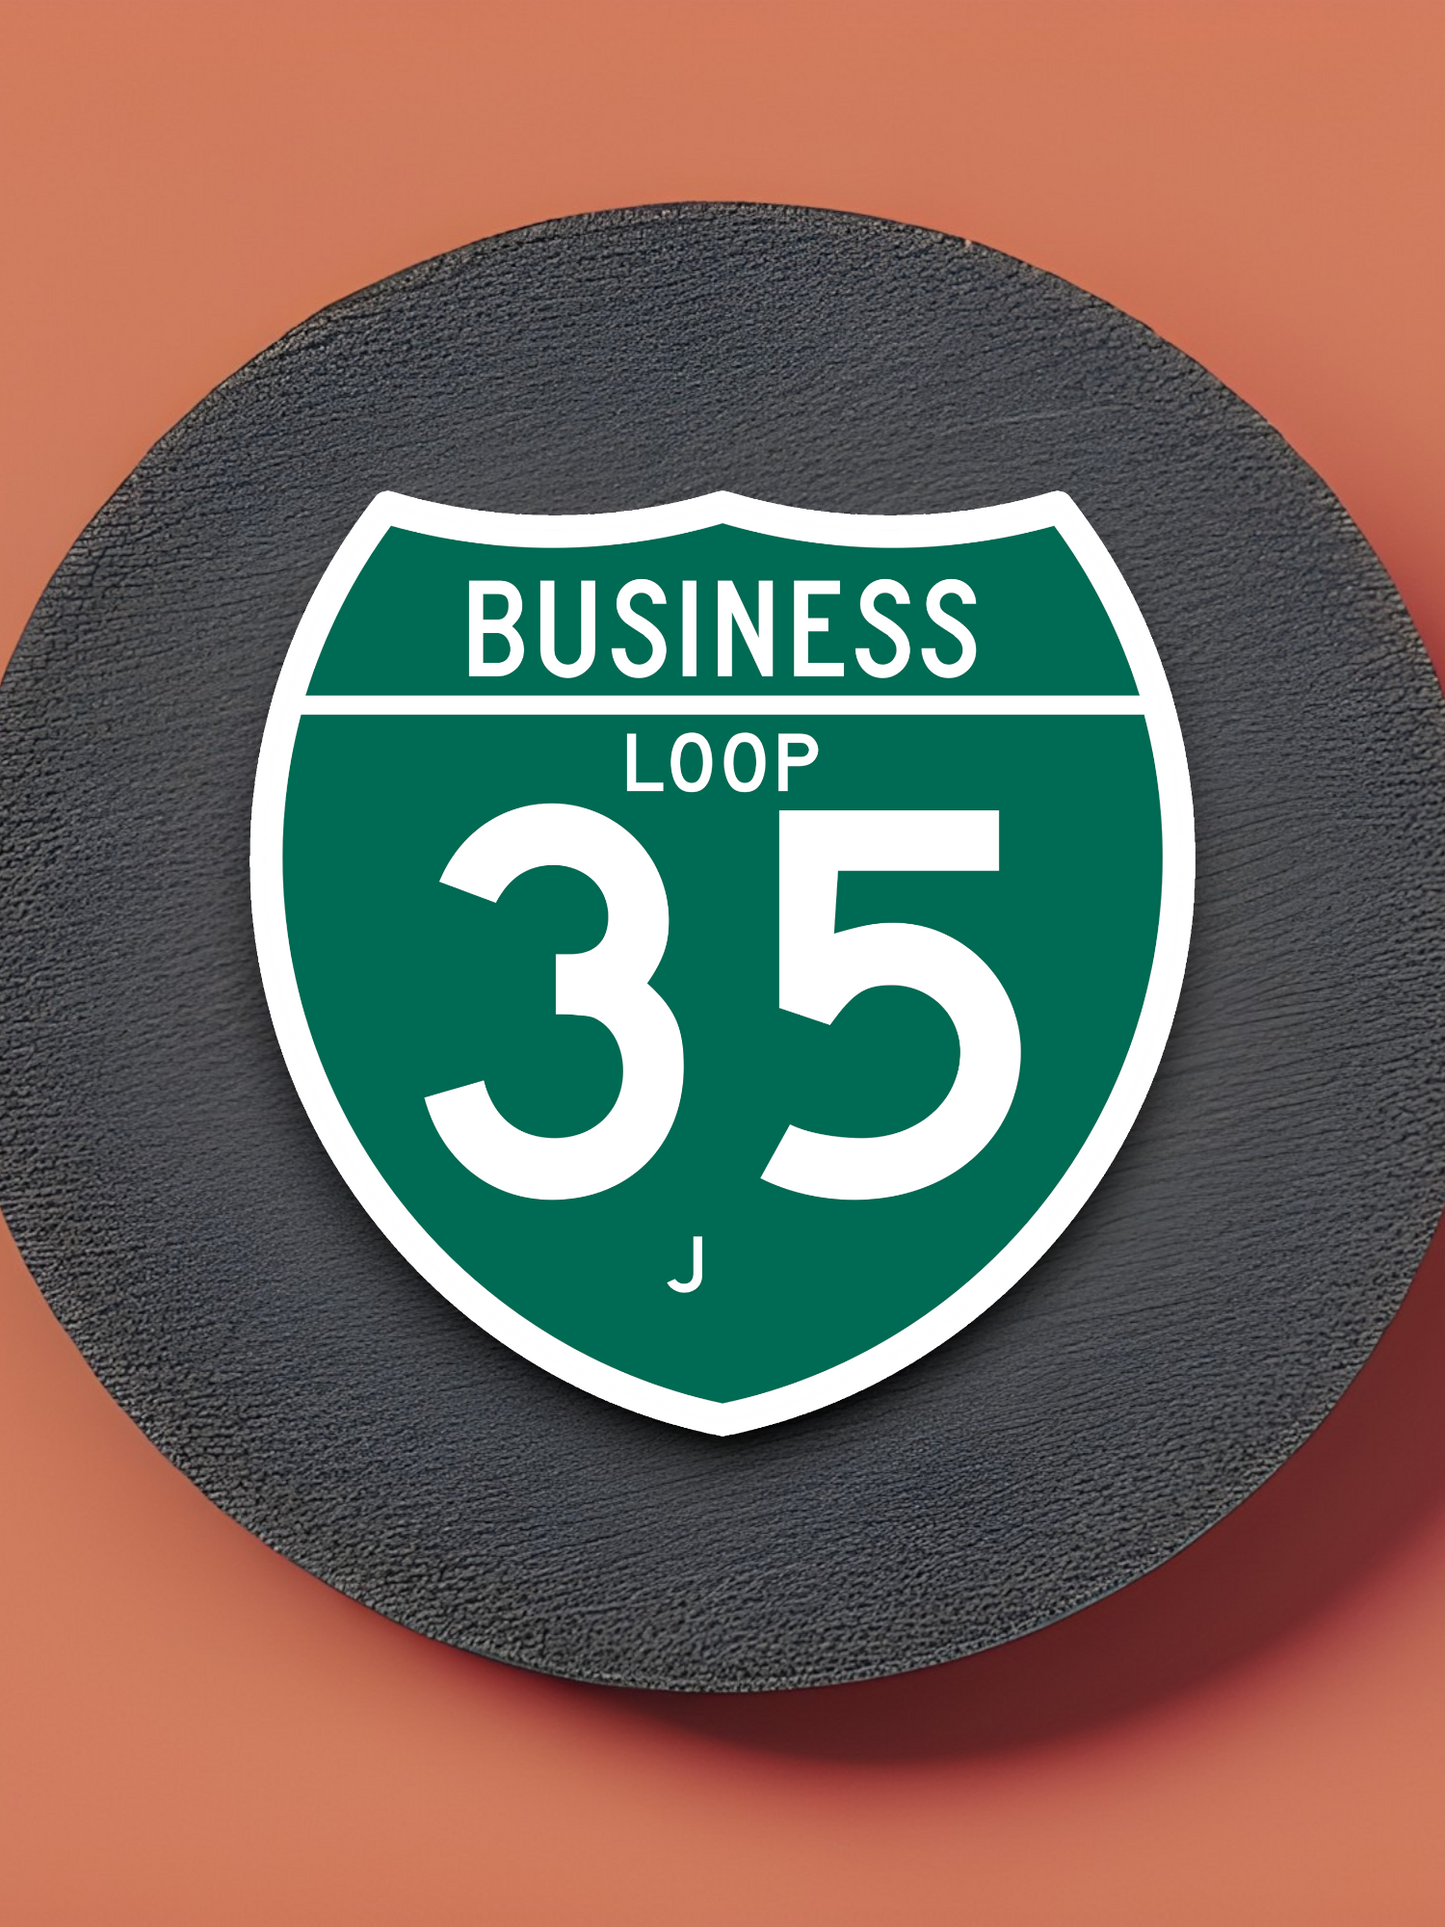 Business Spur Interstate 35-J Texas Road Sign Sticker